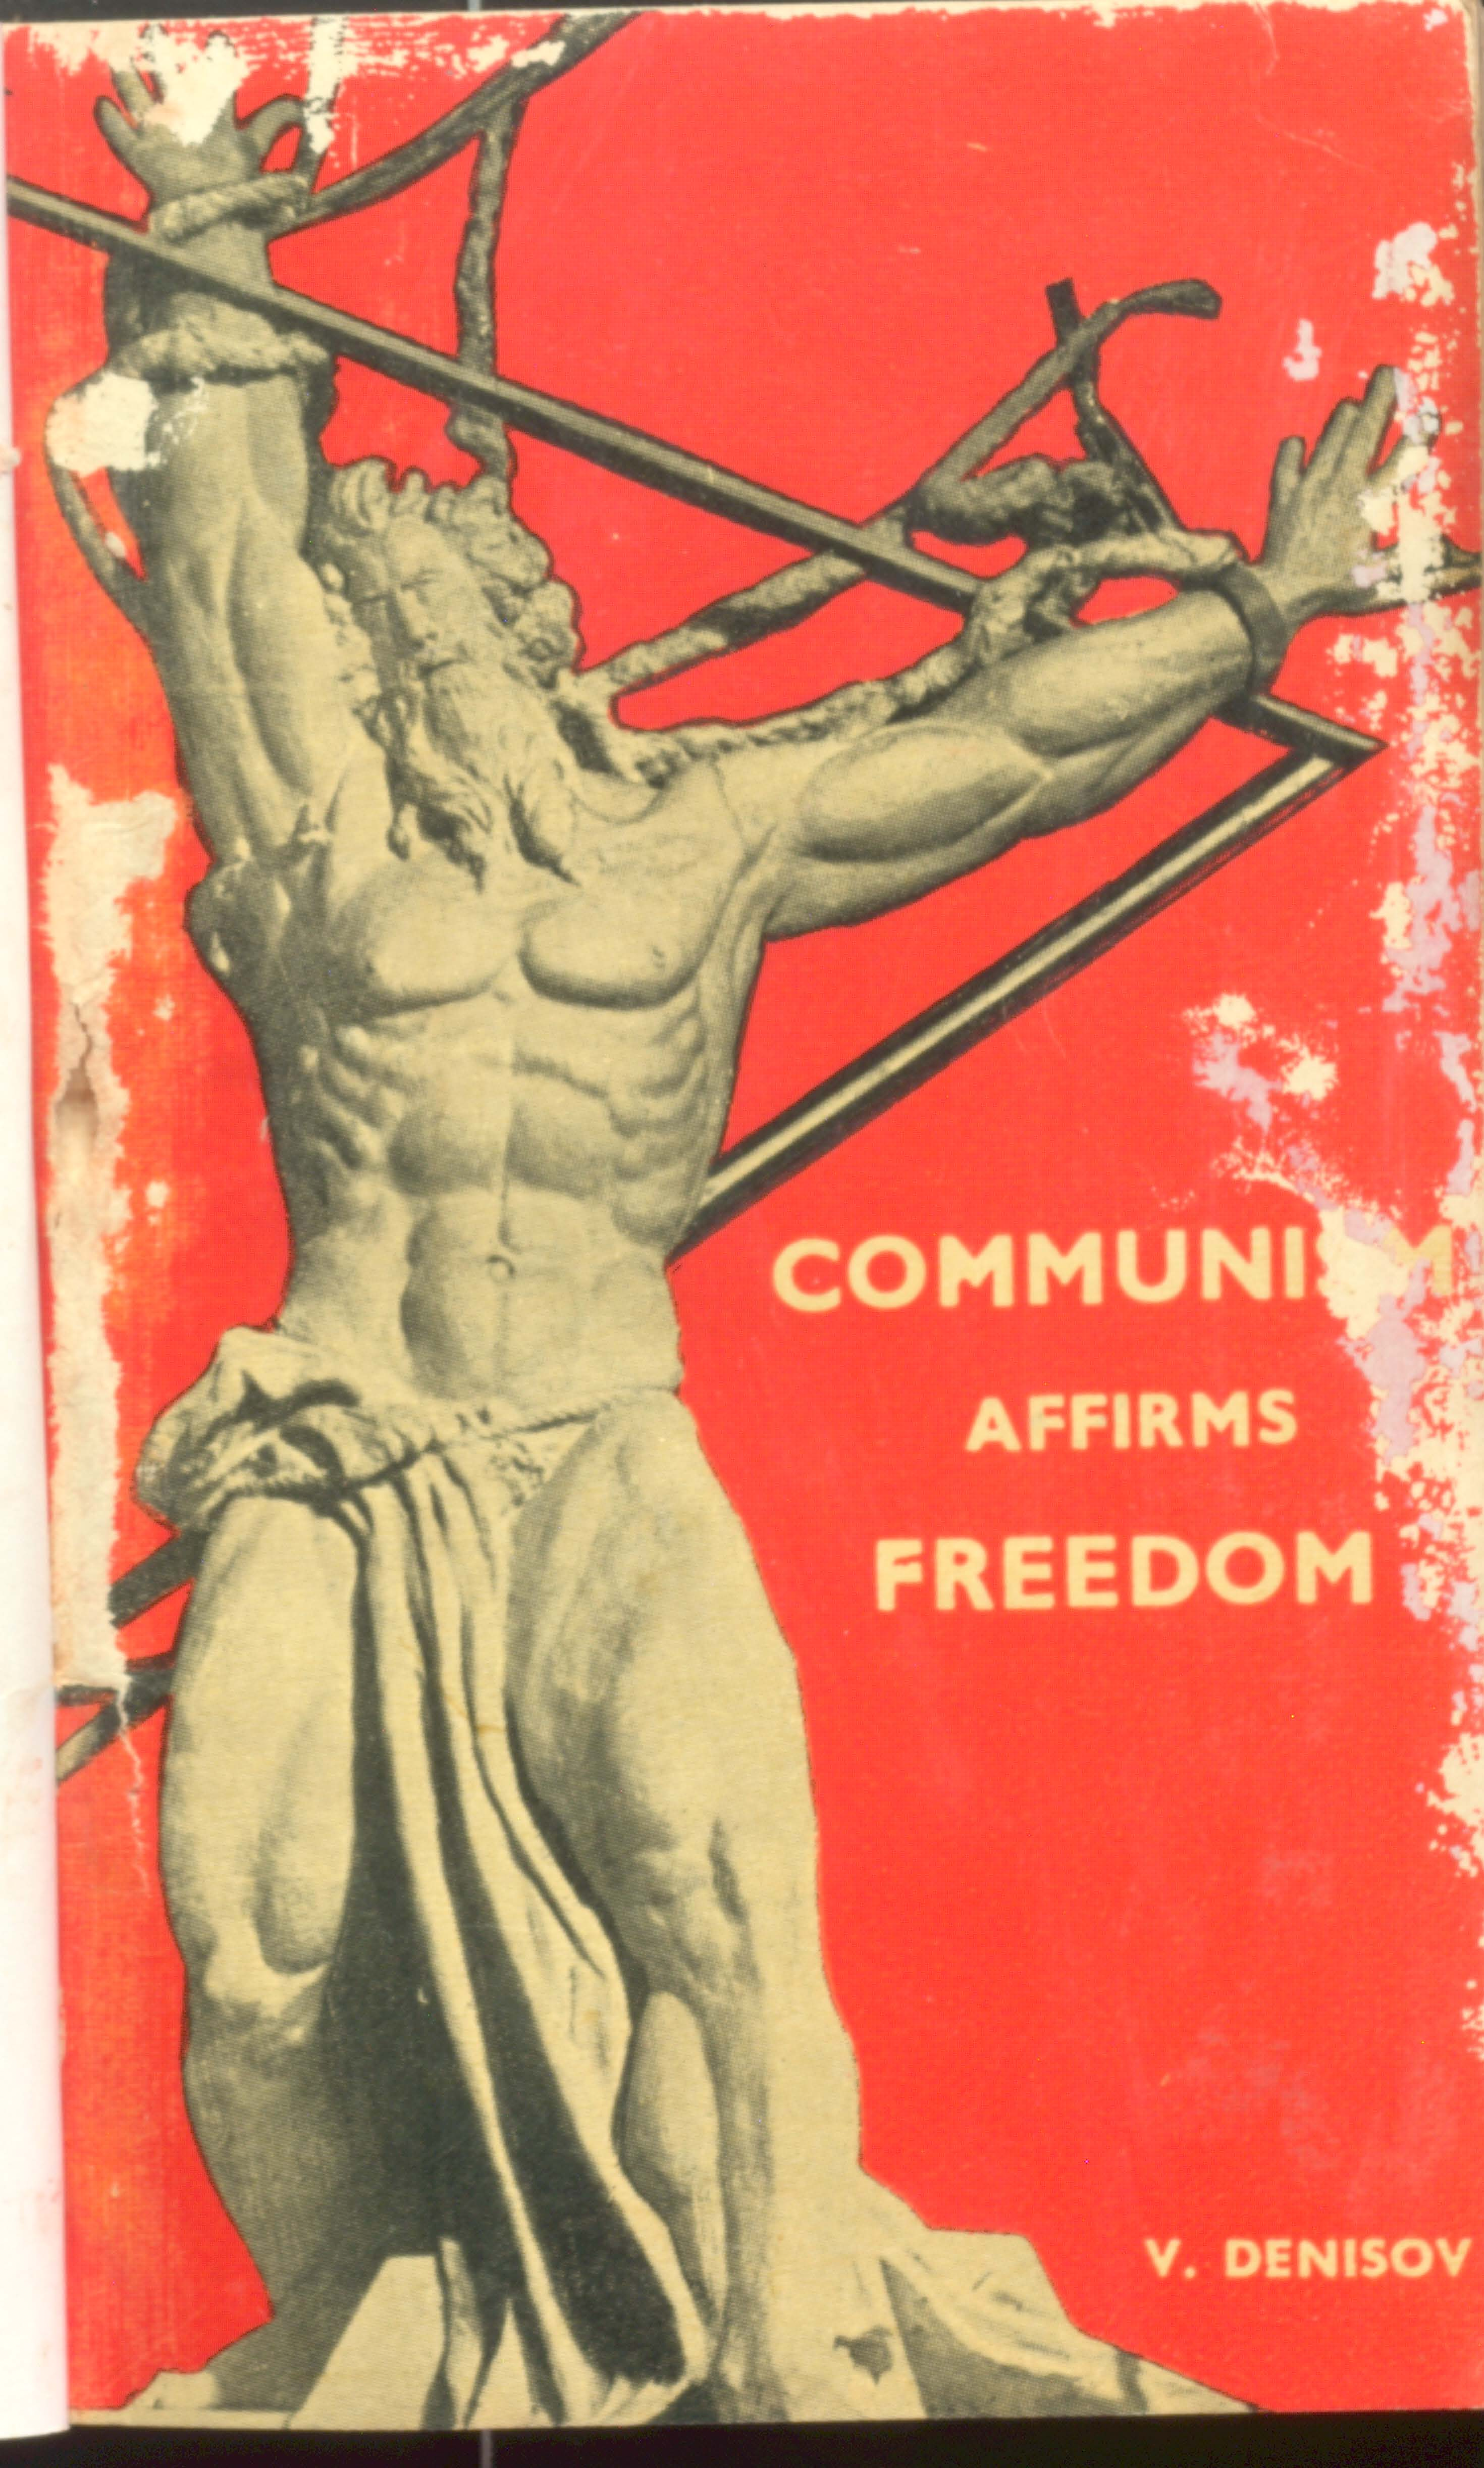 COMMUNISM AFFIRMS FREEDOM